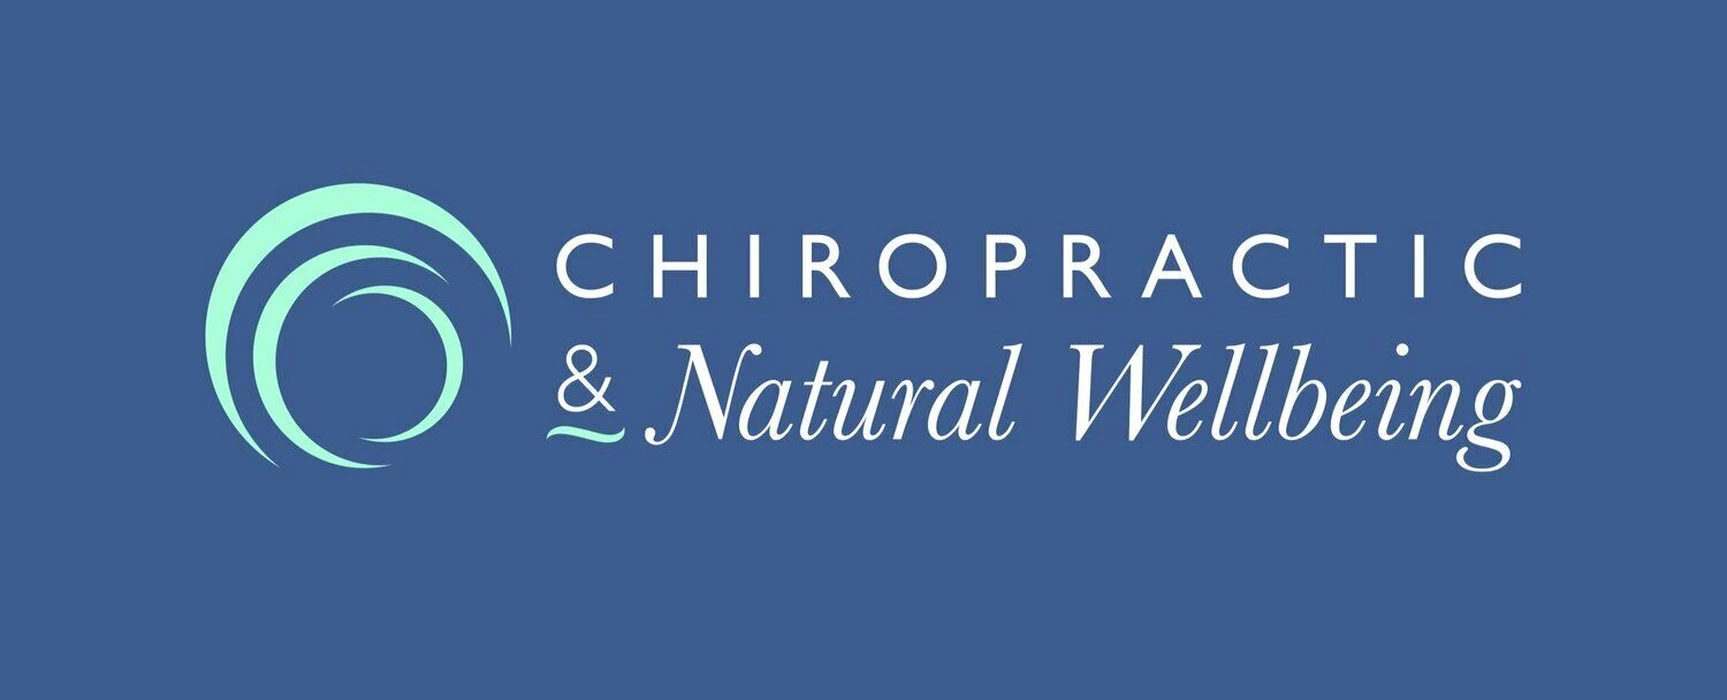 075811+-+Chiropractic+%26+Natural+Wellbeing+Logo+Horizontal+WO